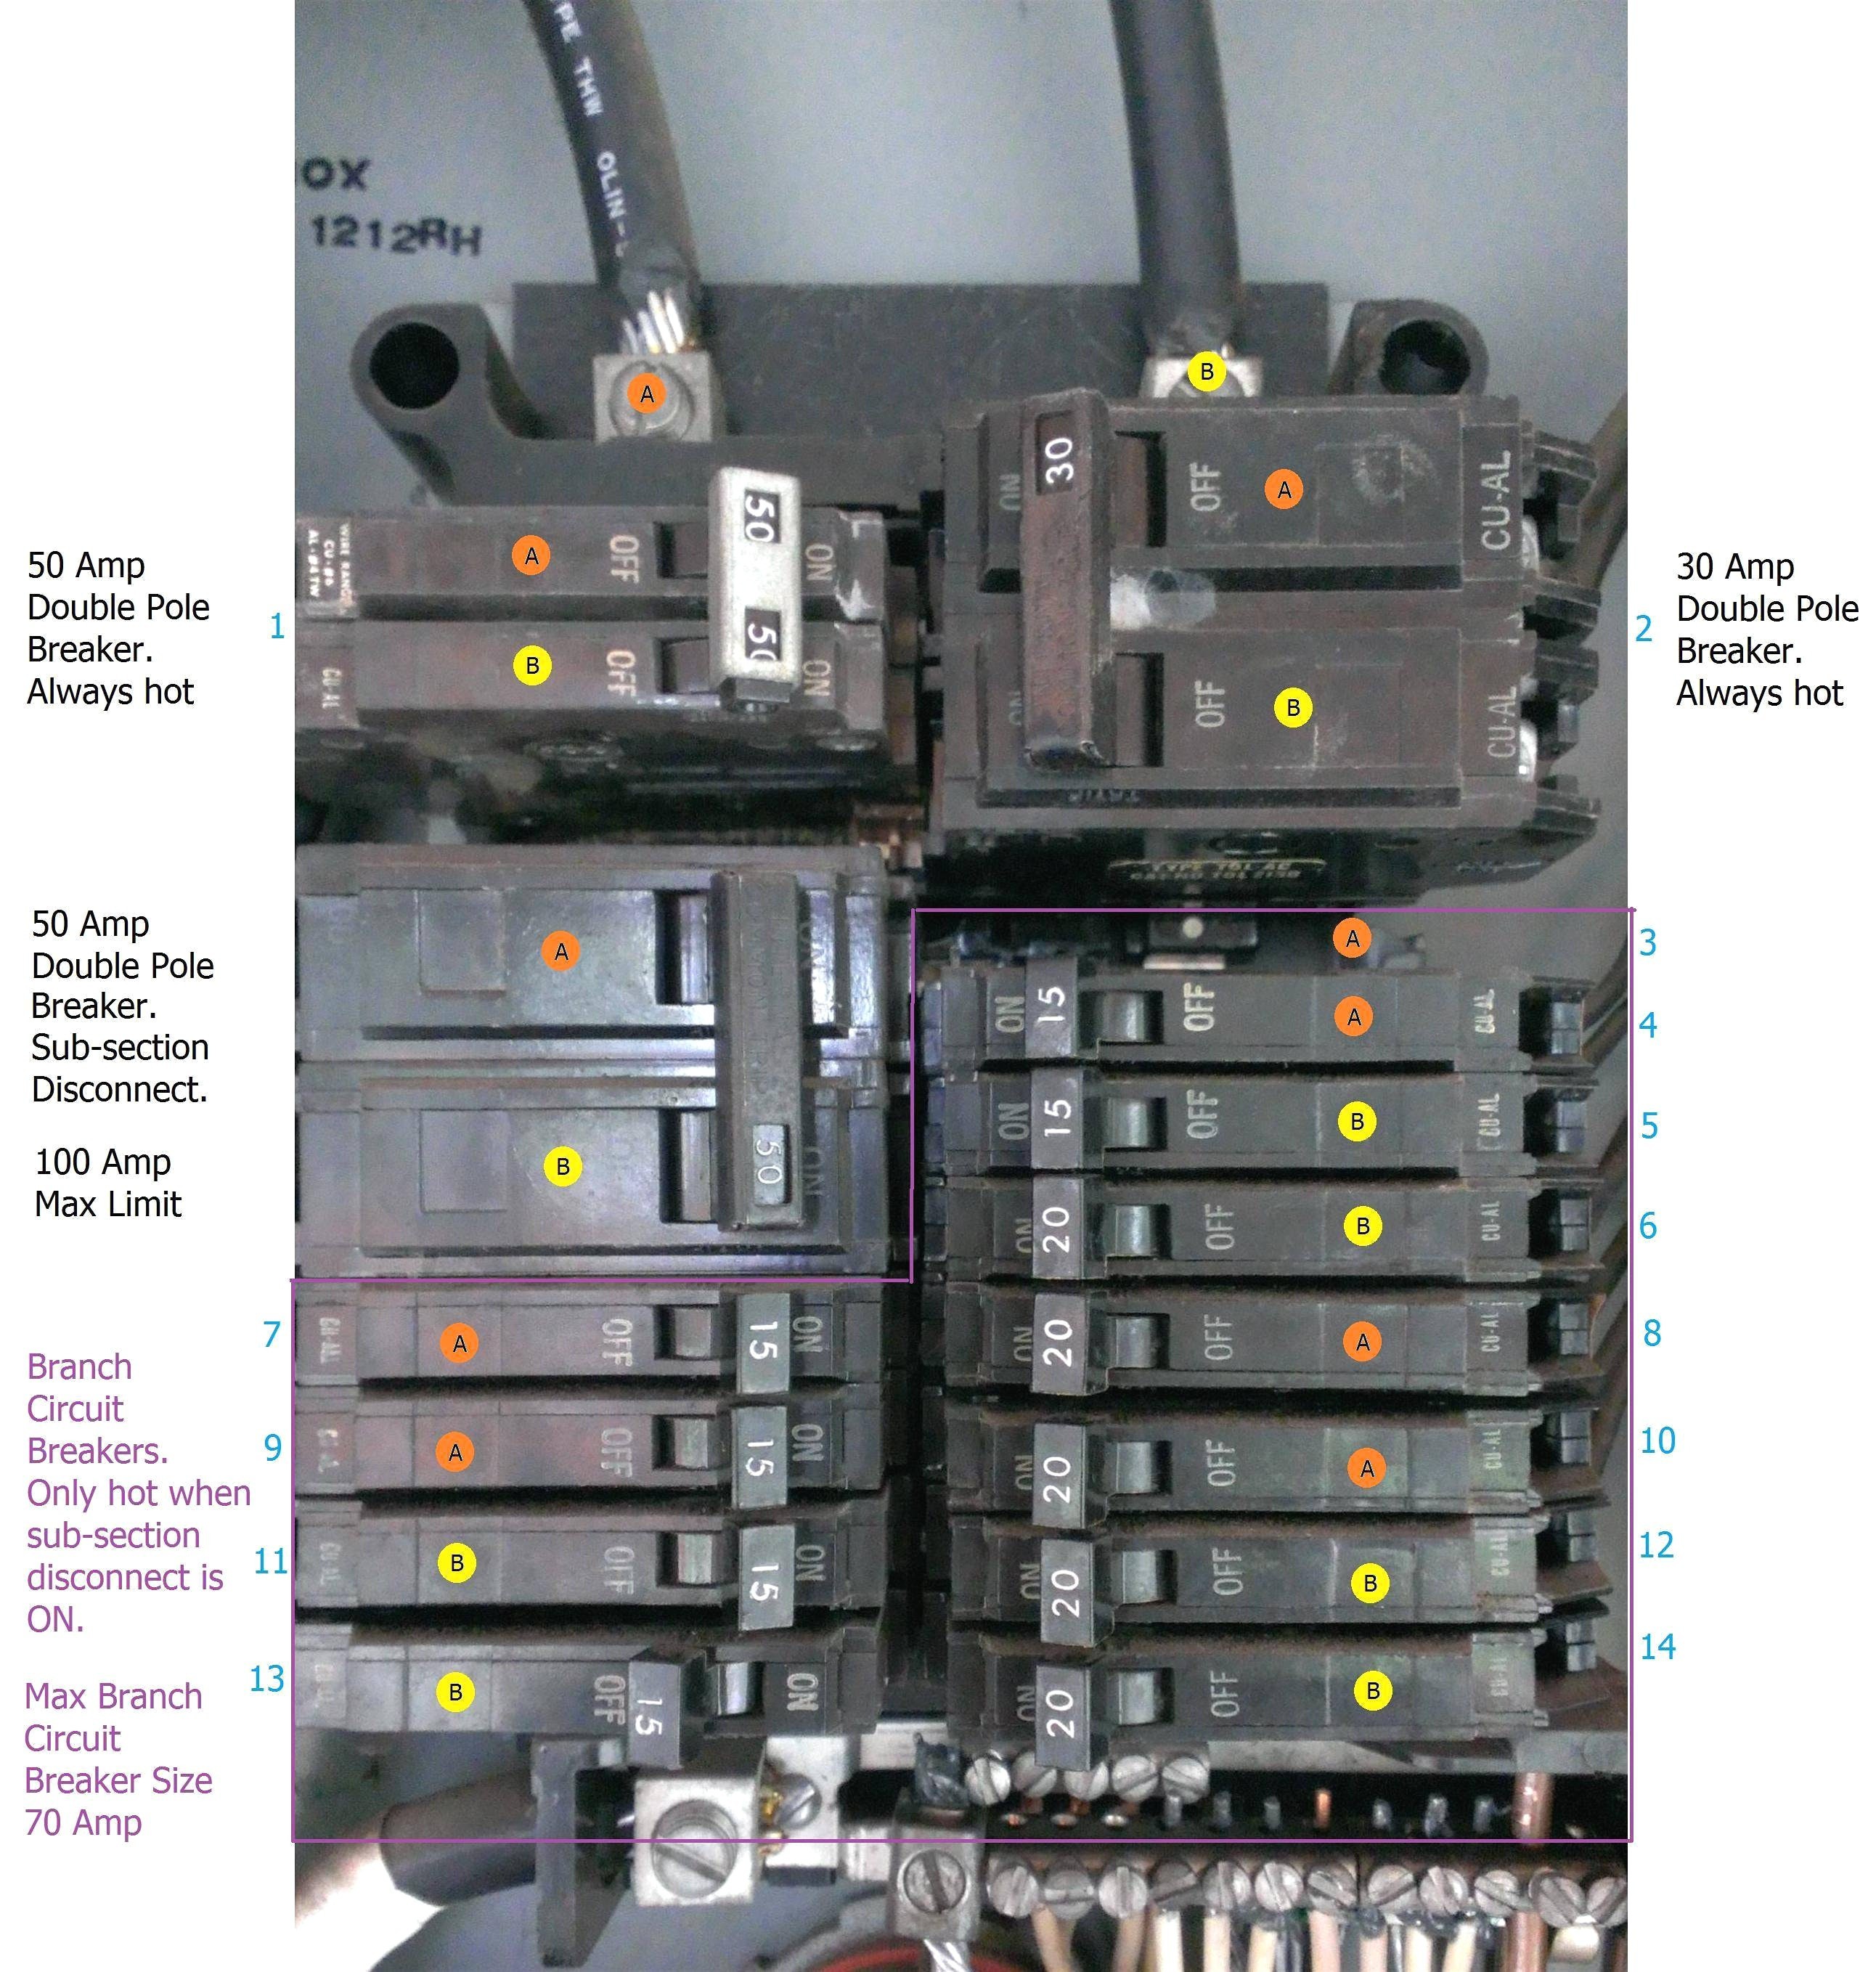 Square D Breaker Box Wiring Diagram Best Breaker Box Wiring Diagram New Afci Circuit Breaker Wiring Diagram